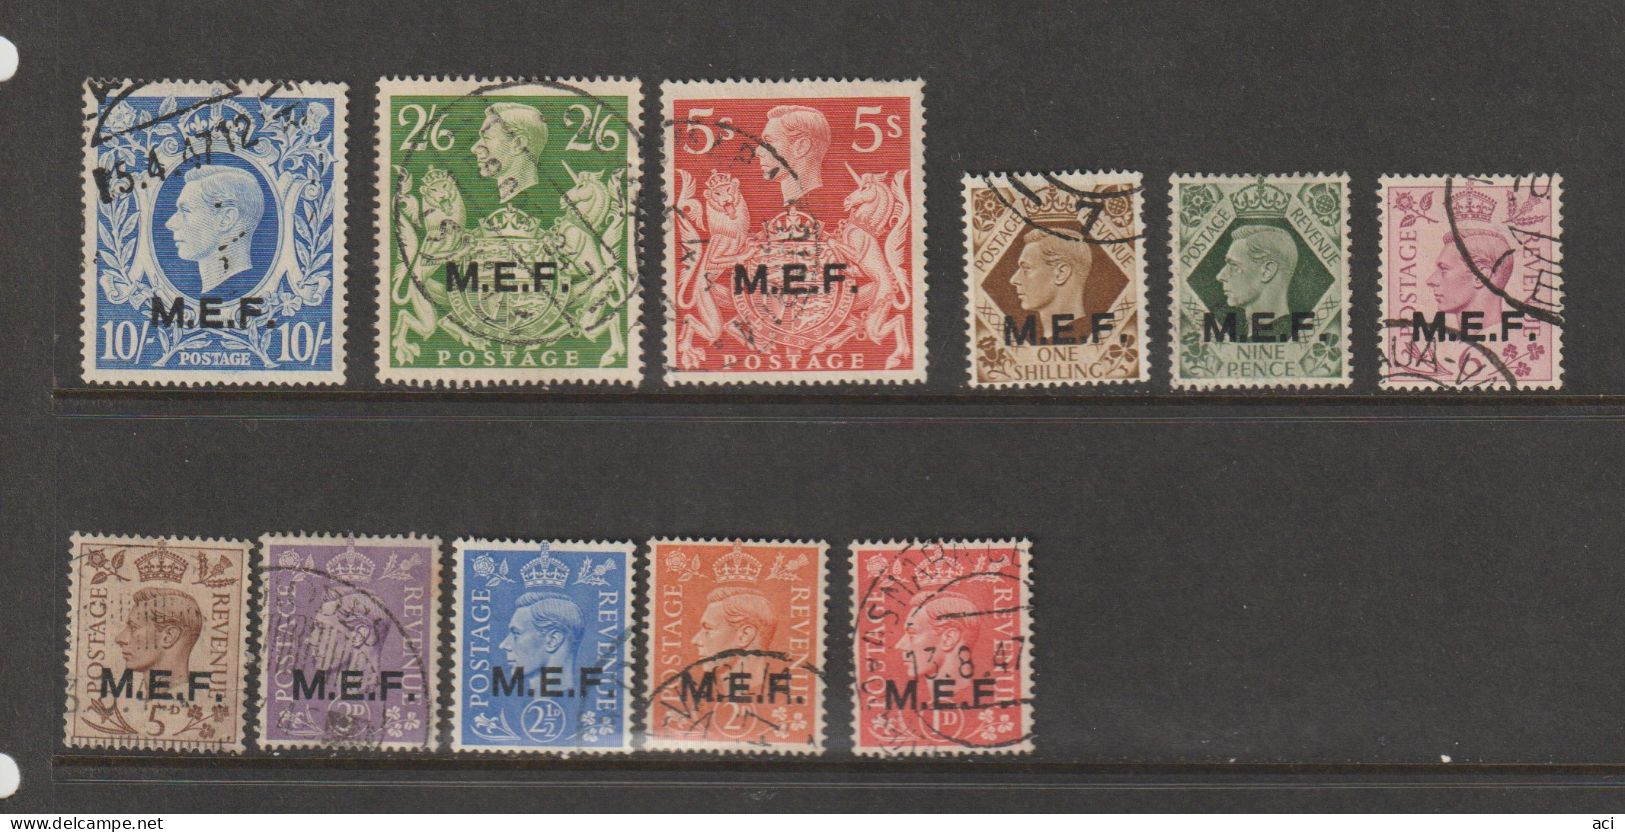 Italy British Occupation M.E.F.  1943-47  Definitives Used, - Britische Bes. MeF